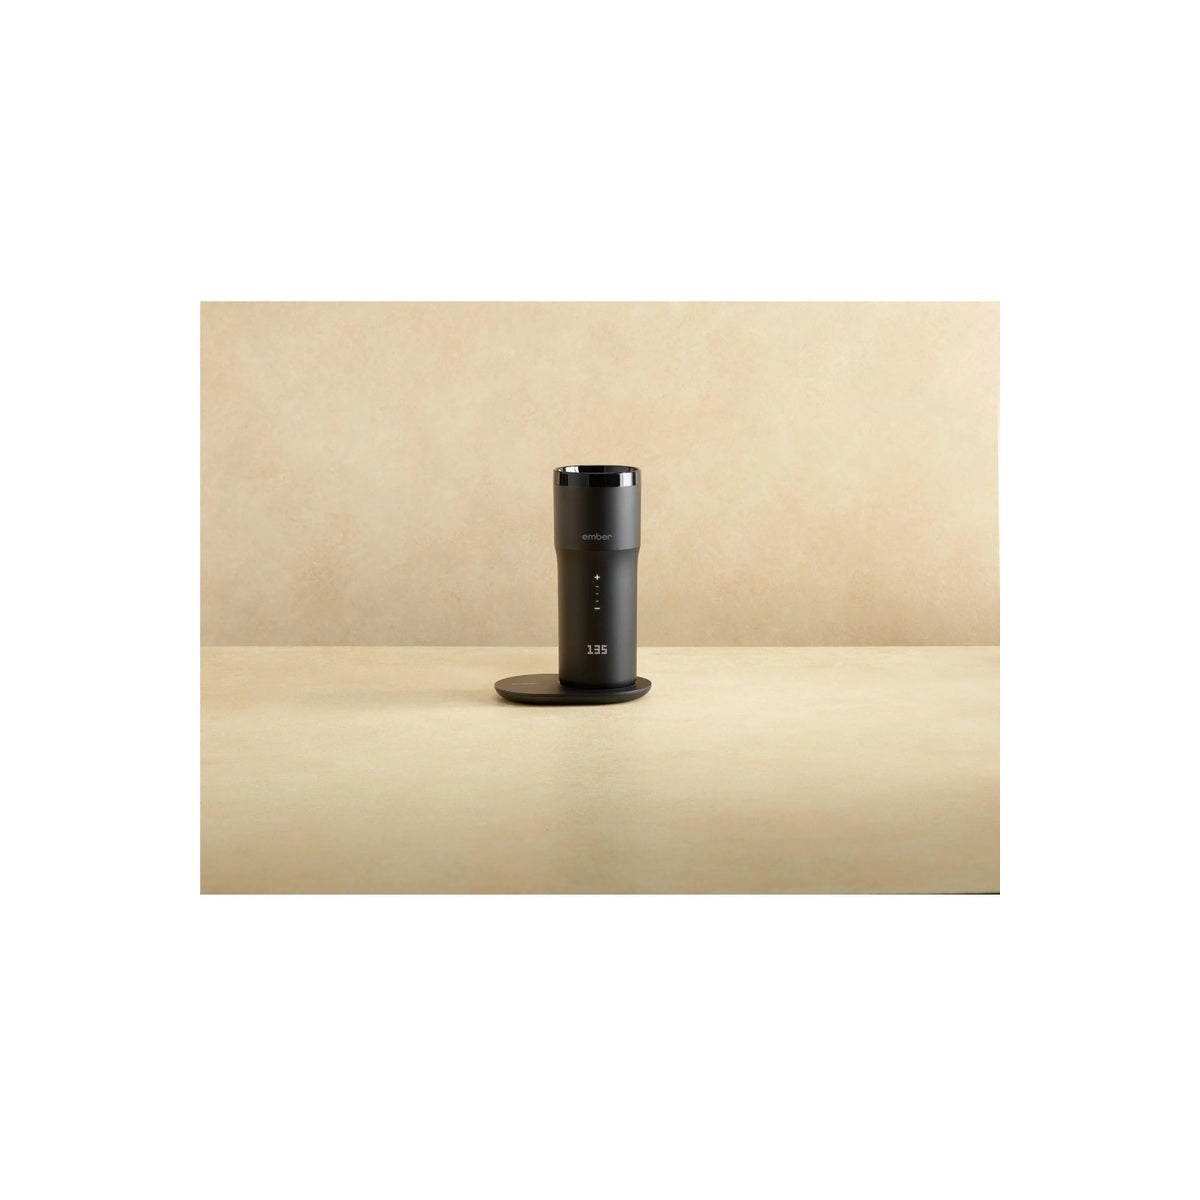 Ember Temperature Control Smart Travel Mug 2+ 354ml (Black)